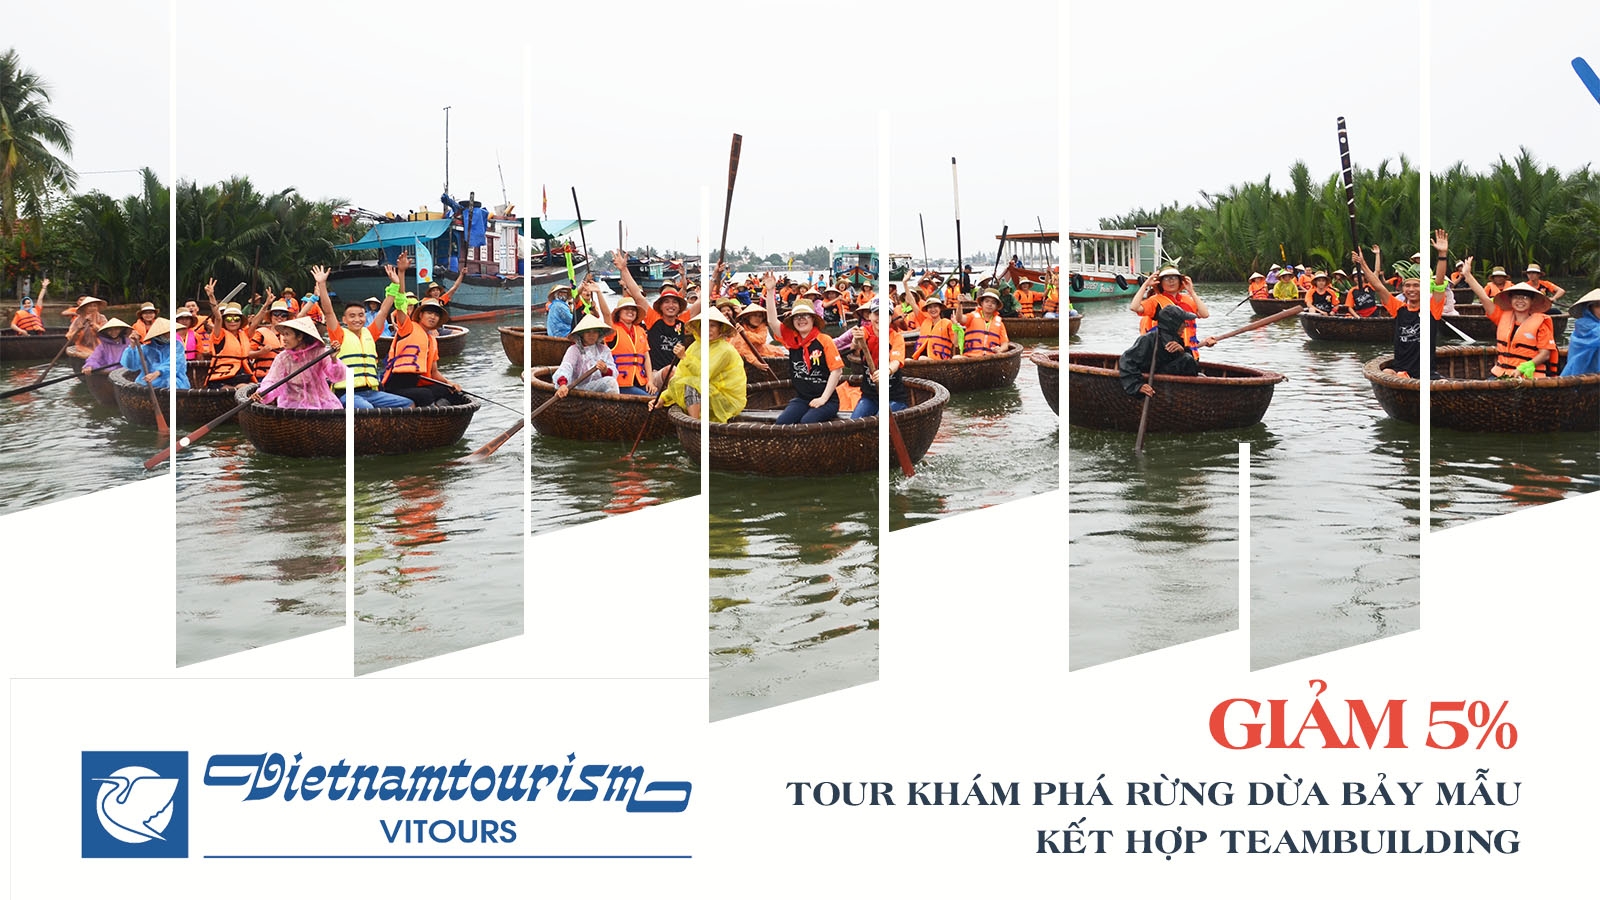 Vitours | Giảm 5% Tour tham quan Rừng Dừa Bảy Mẫu kết hợp team building 1